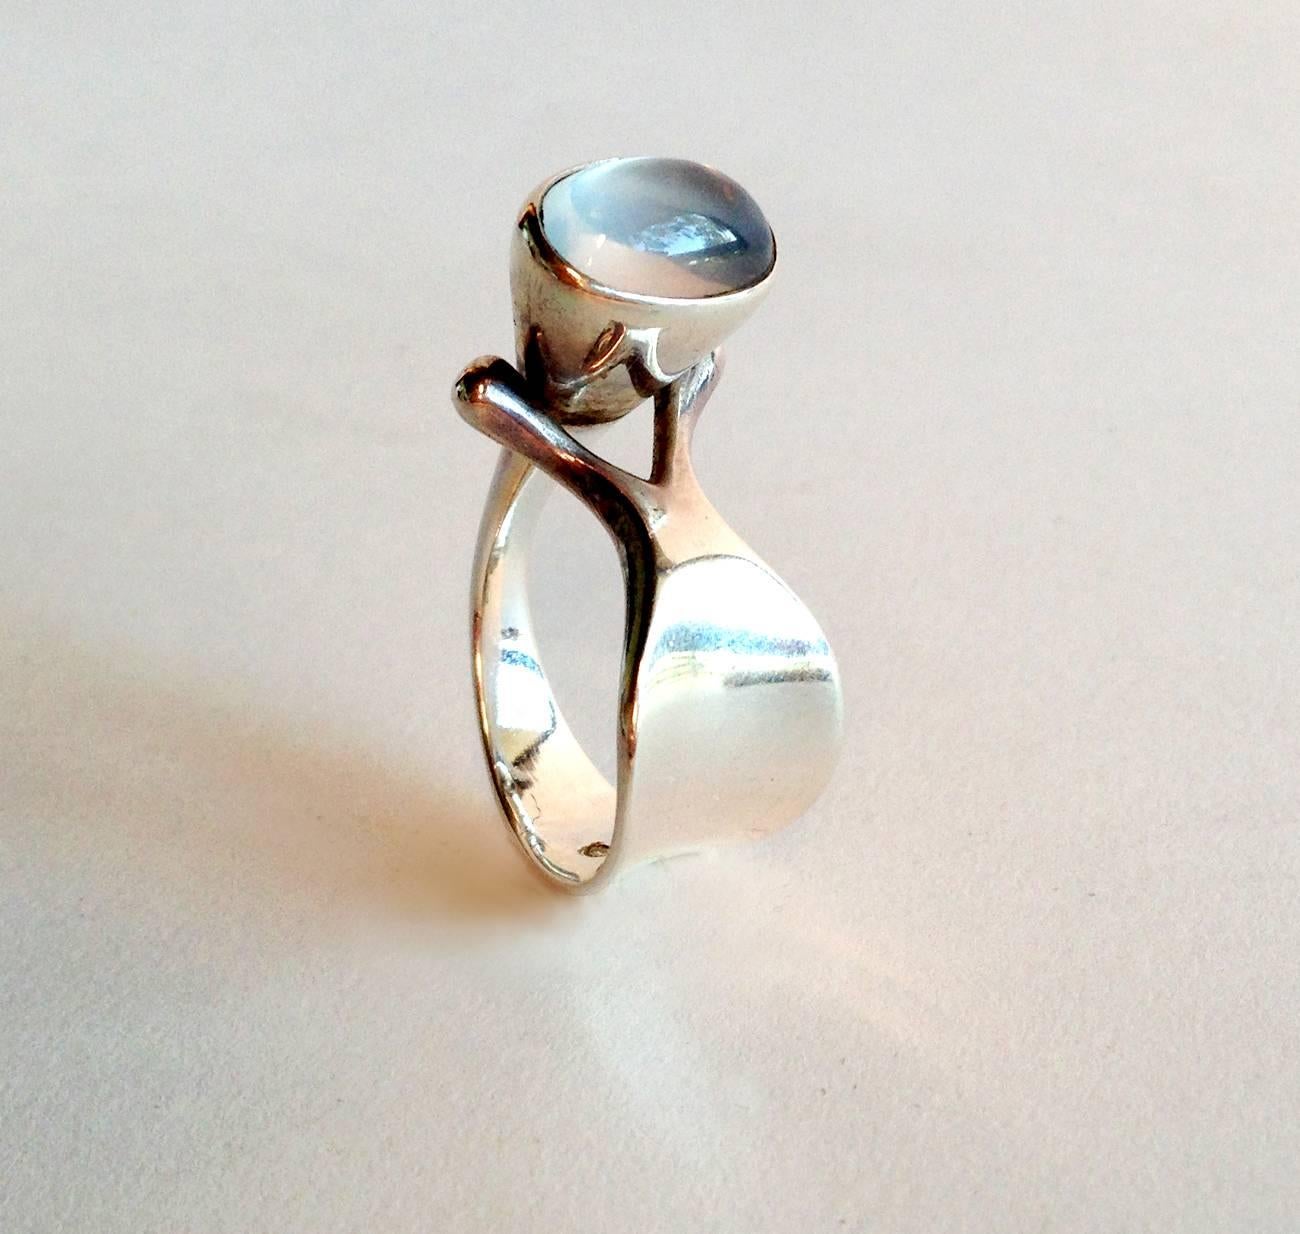 Dew drop moonstone ring designed Vivianna Torun Bülow-Hübe for Georg Jensen of Denmark.  Ring is a finger size 7 and is slightly adjustable.  Signed Georg Jensen, Denmark, 152.  In very good vintage condition.